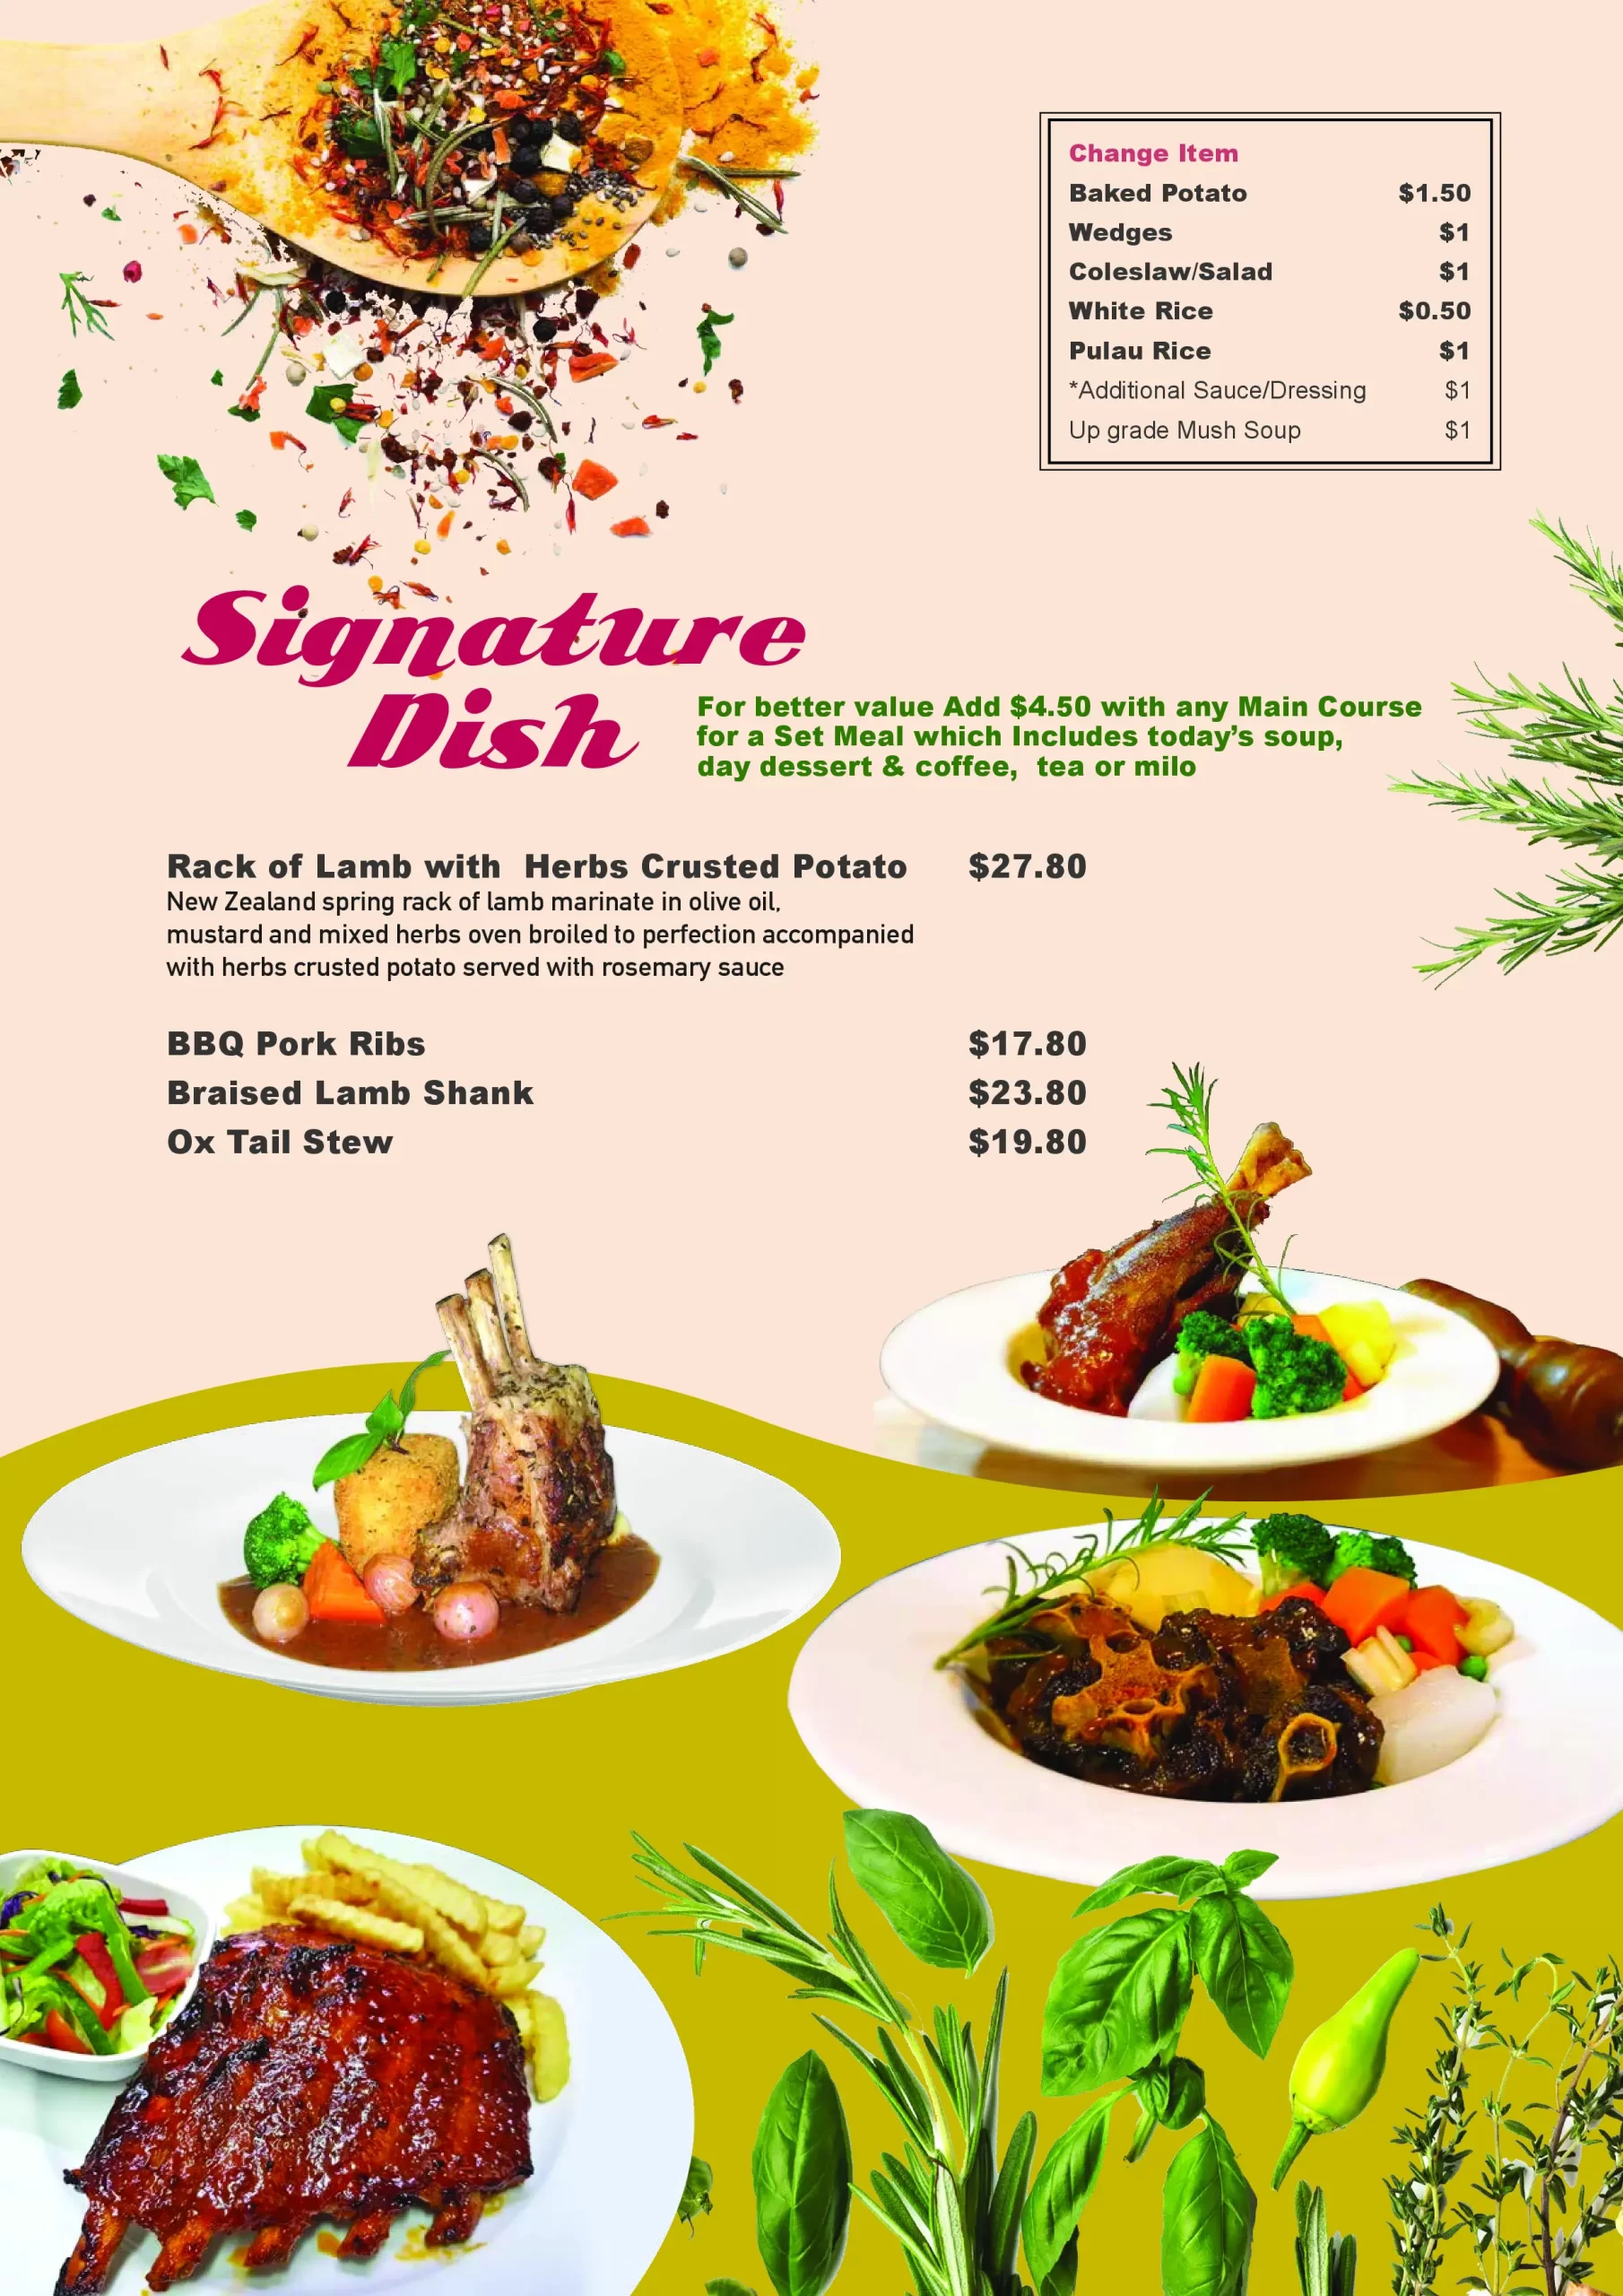 Tim’s Restaurant Singapore  bbq pork ox tail stew Menu & Price List 2022